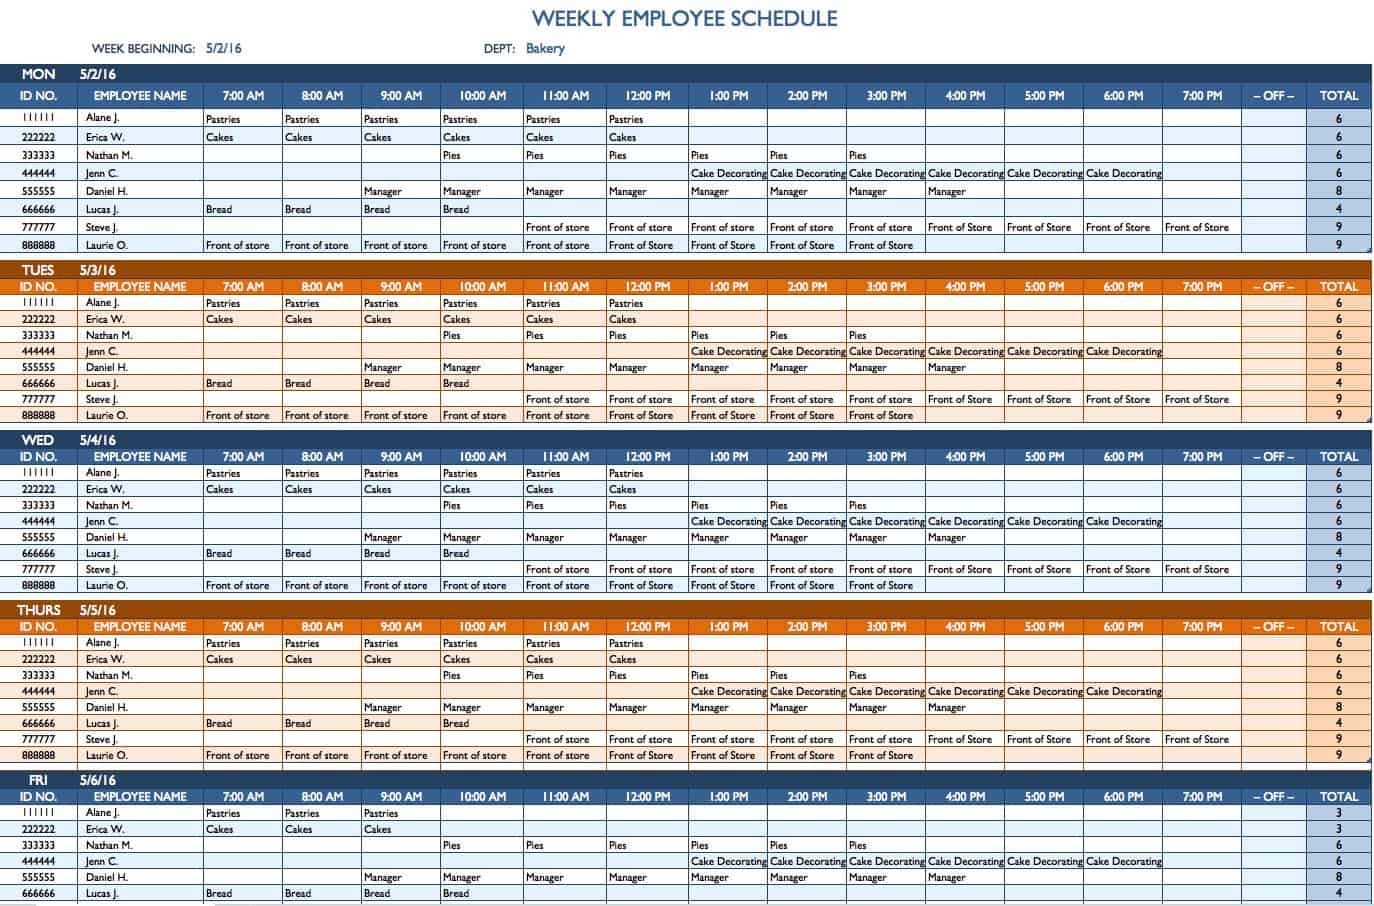 Free Weekly Schedule Templates For Excel - Smartsheet